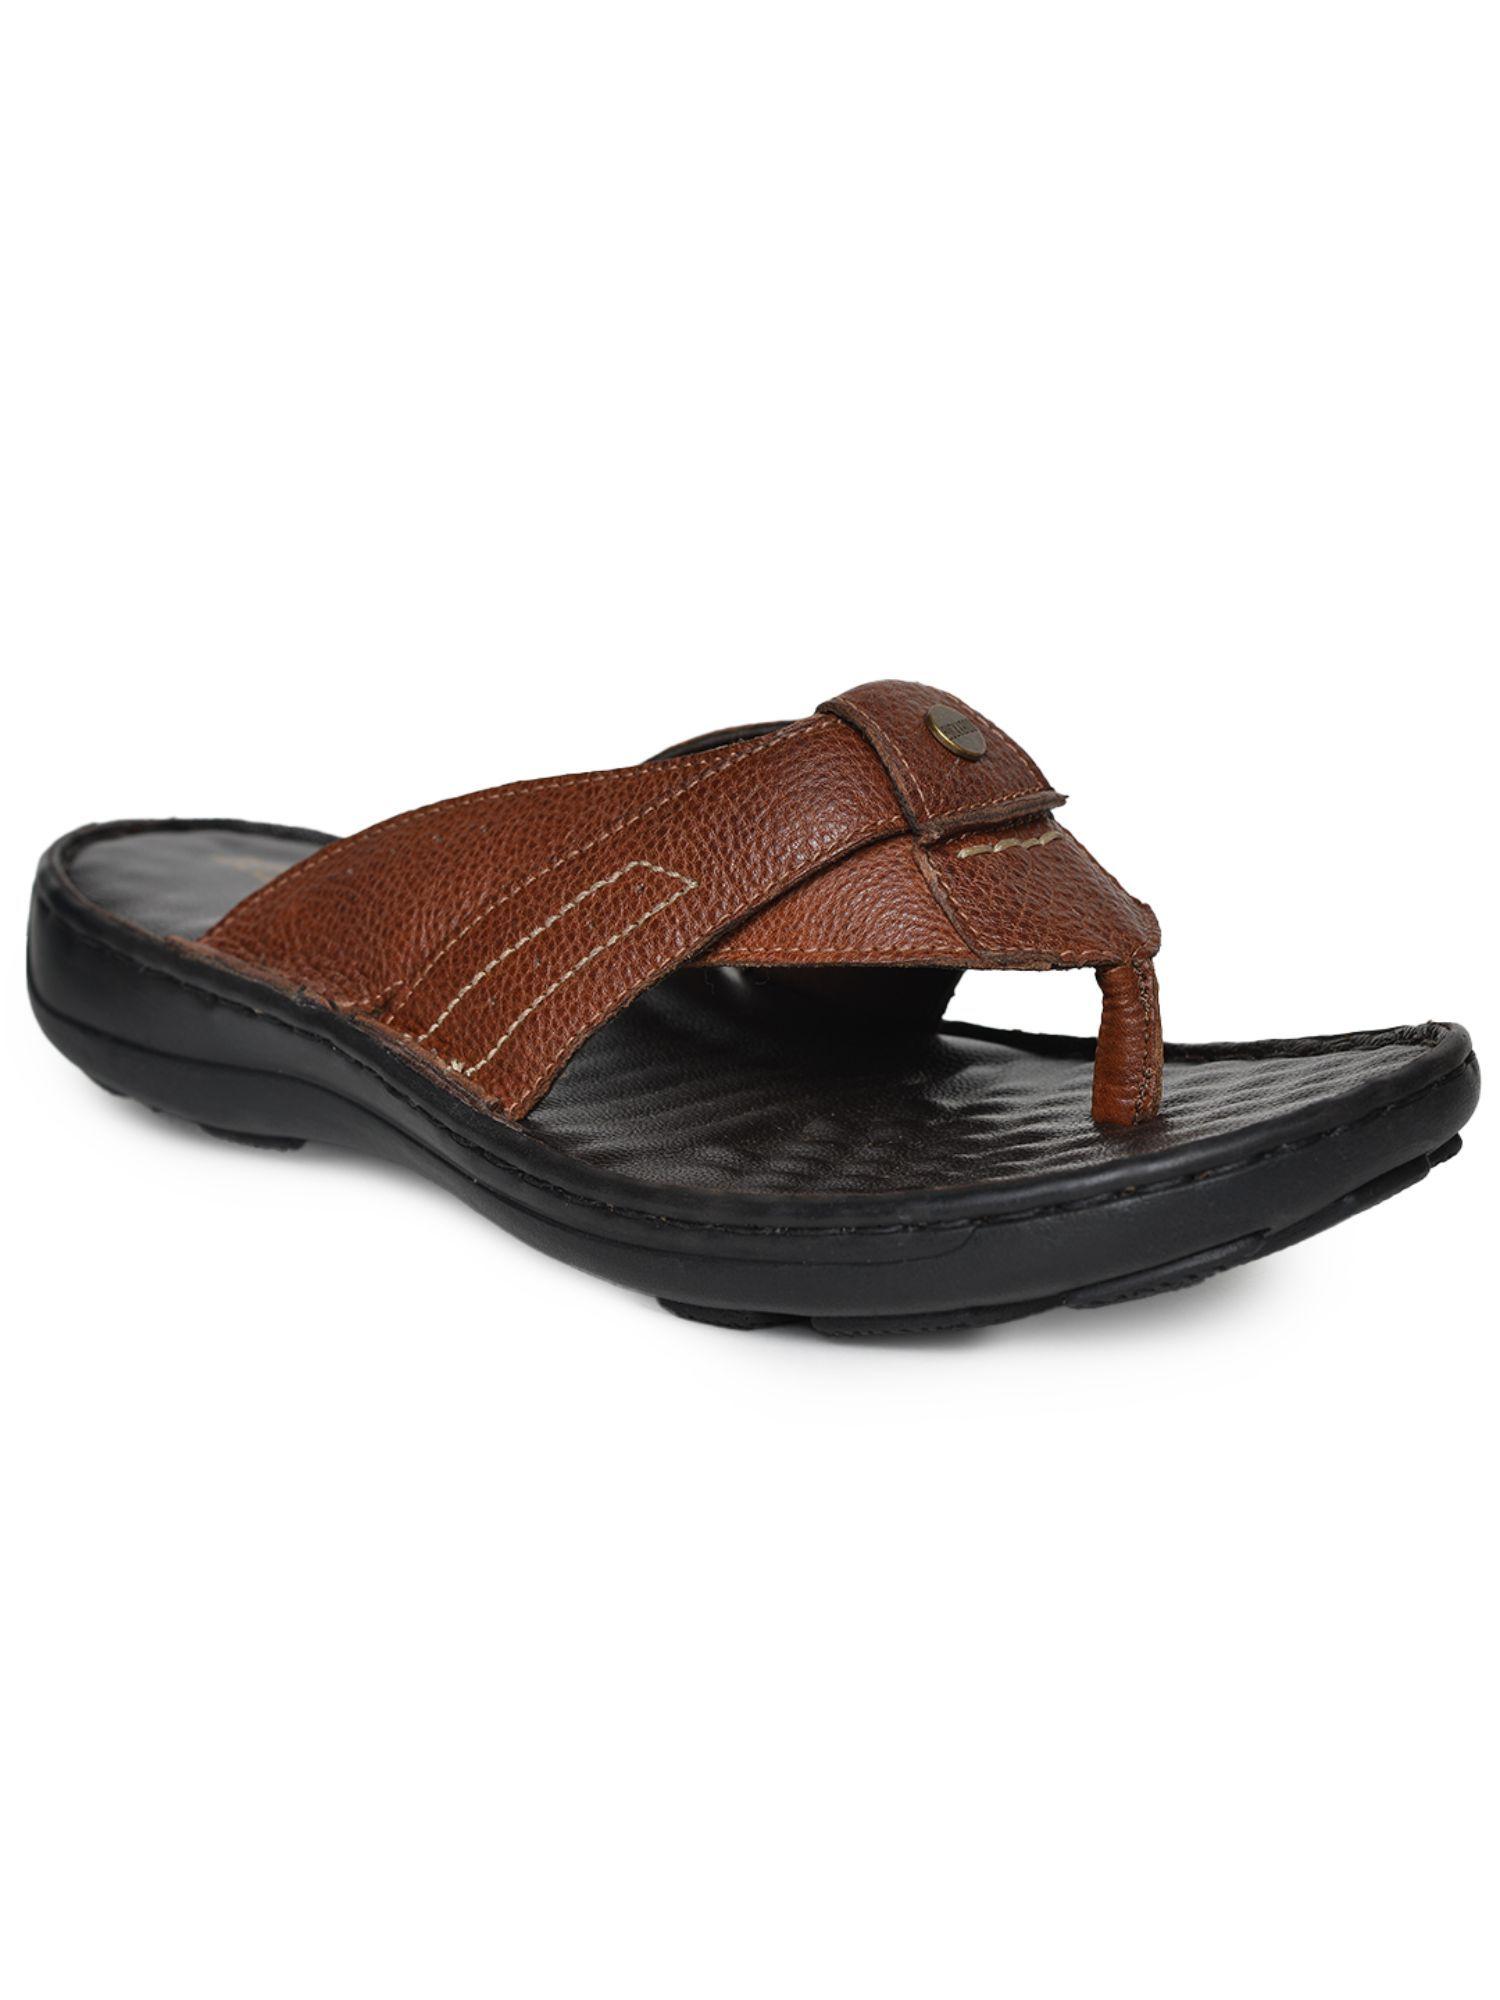 zanelio-genuine-leather-casual-sandals-for-mens